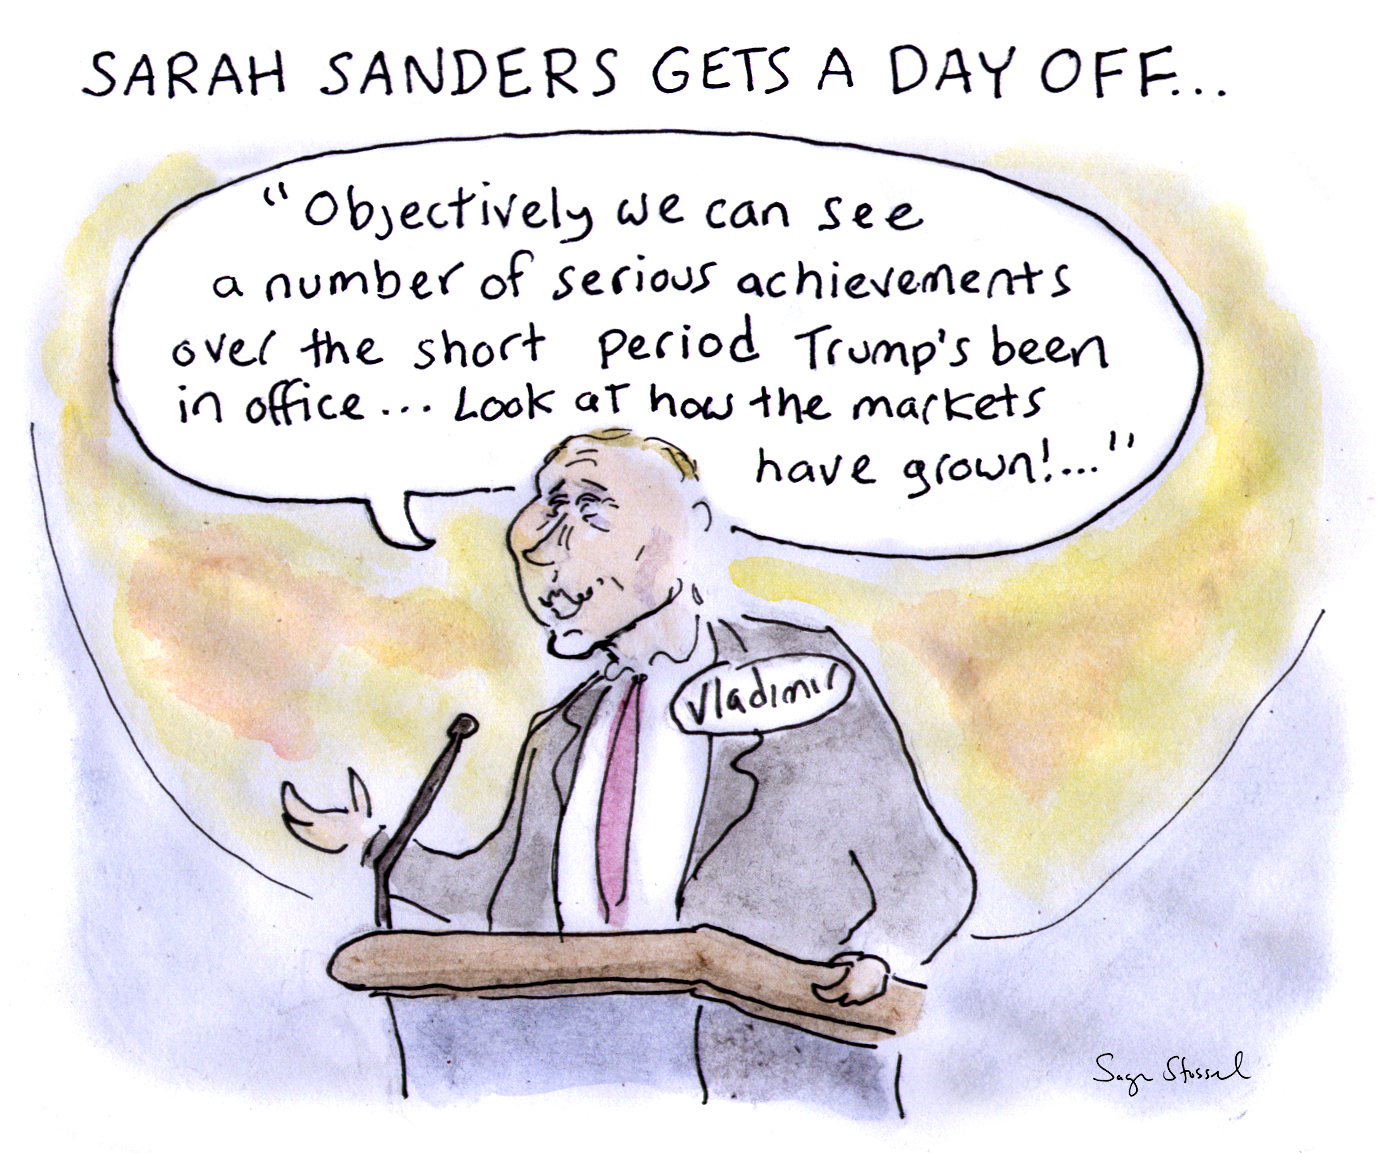 putin, trump, annual press conference, collusion, sarah huckabee sanders, cartoon